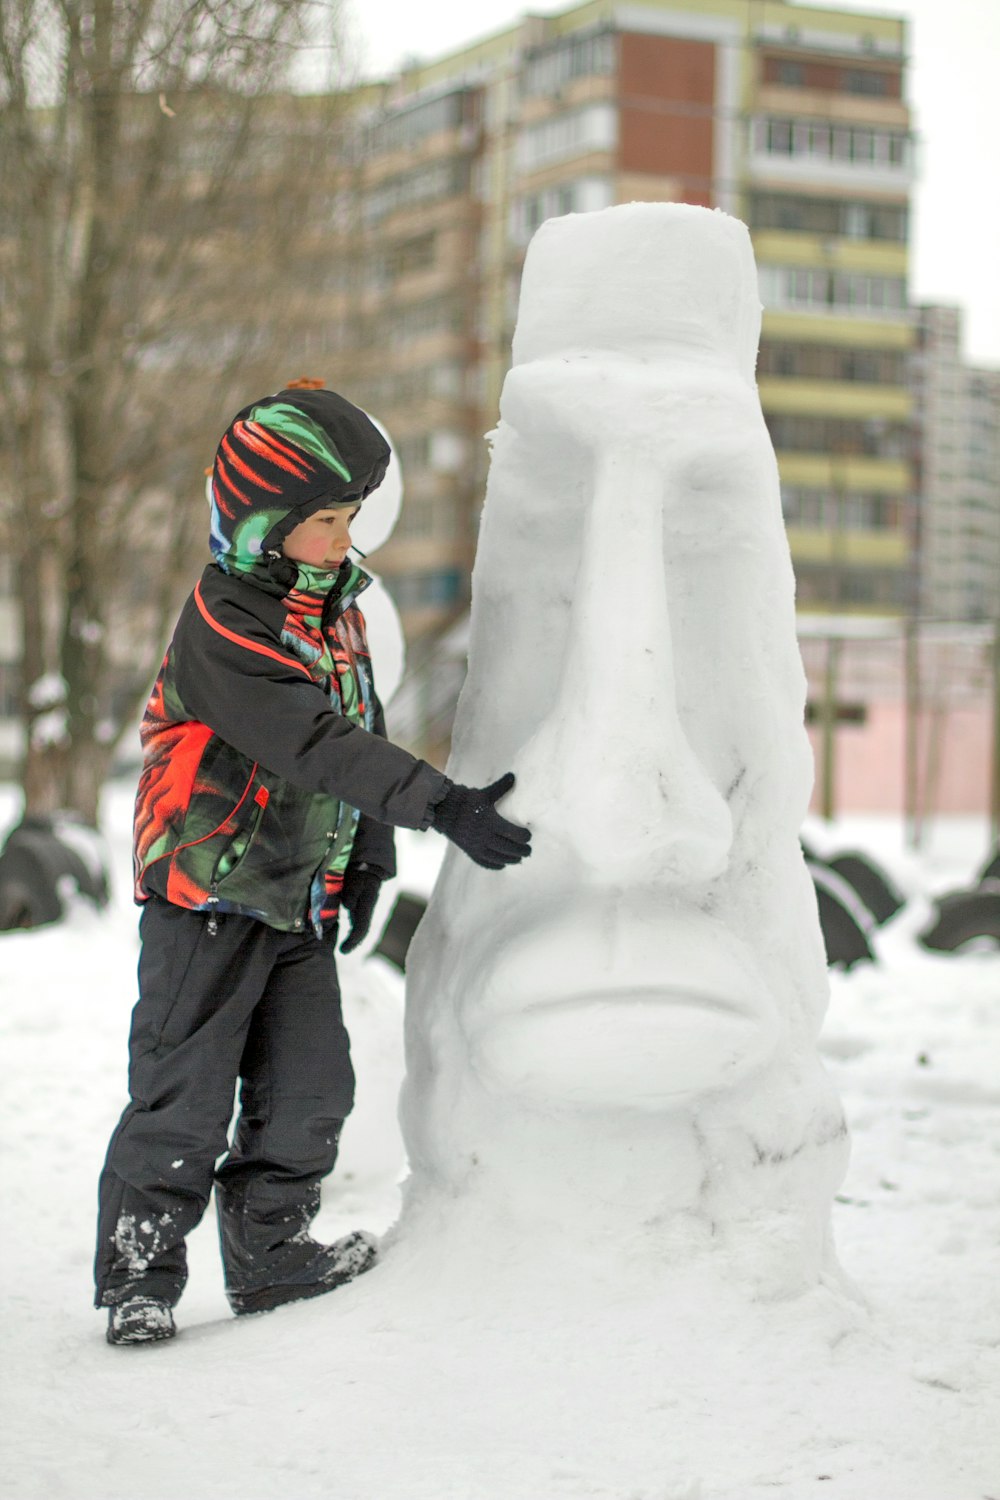 a young boy standing next to a snow sculpture